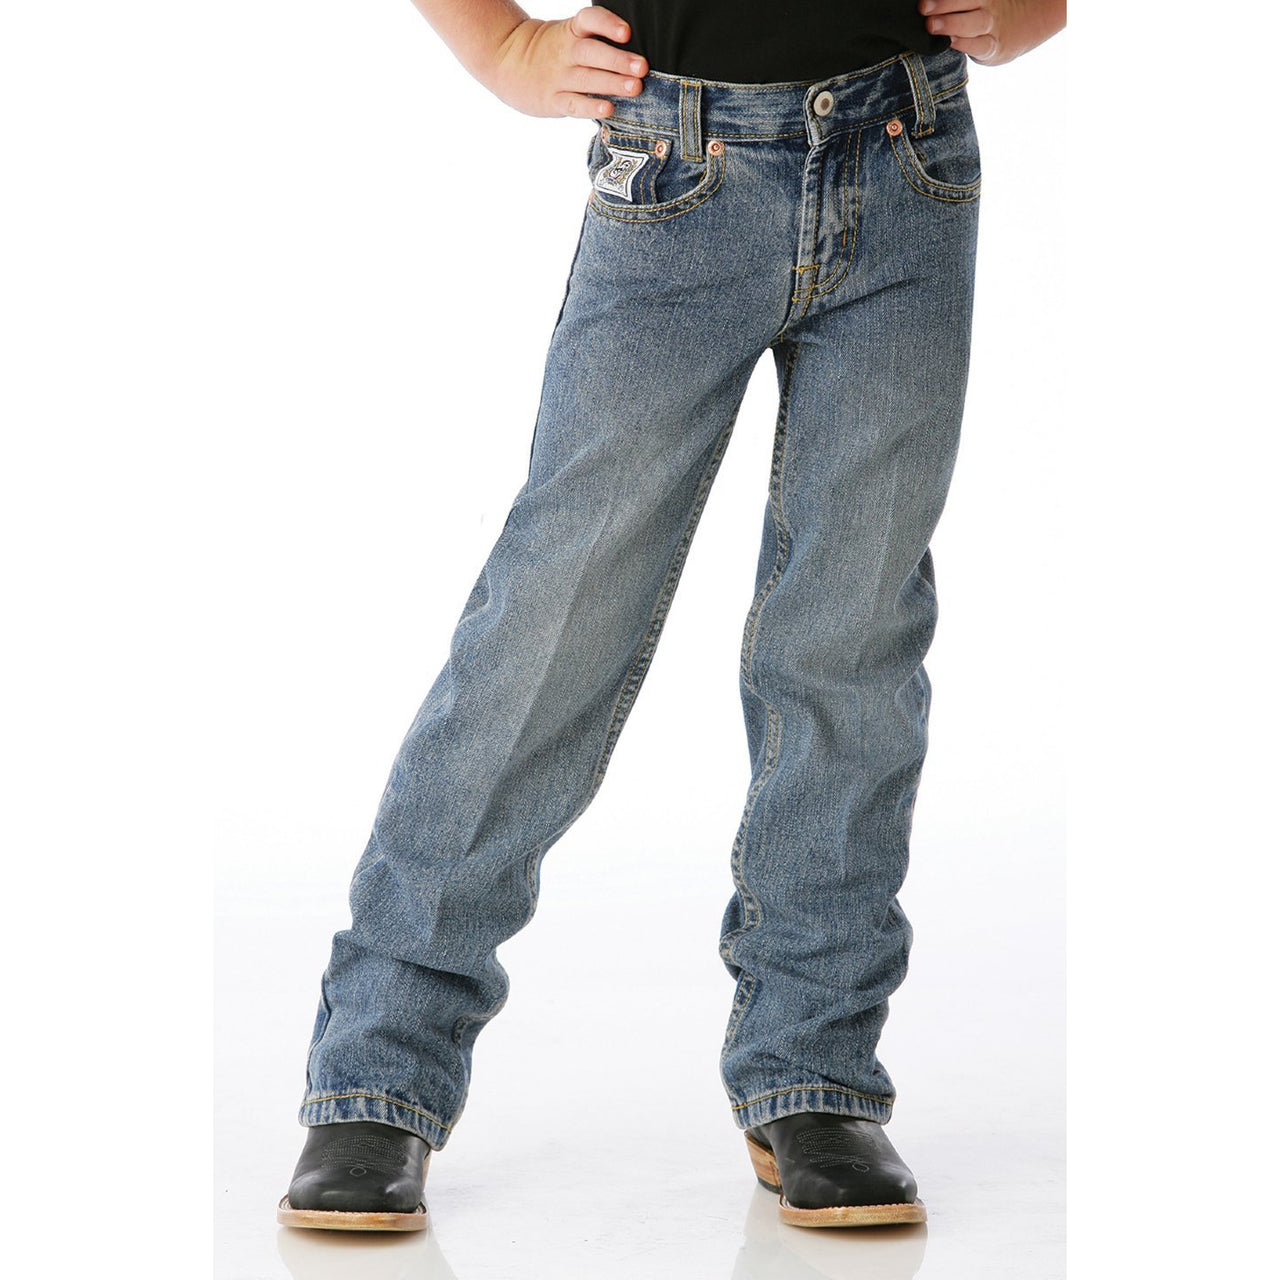 Cinch Boys White Label Slim Fit Jeans - Light Stonewash